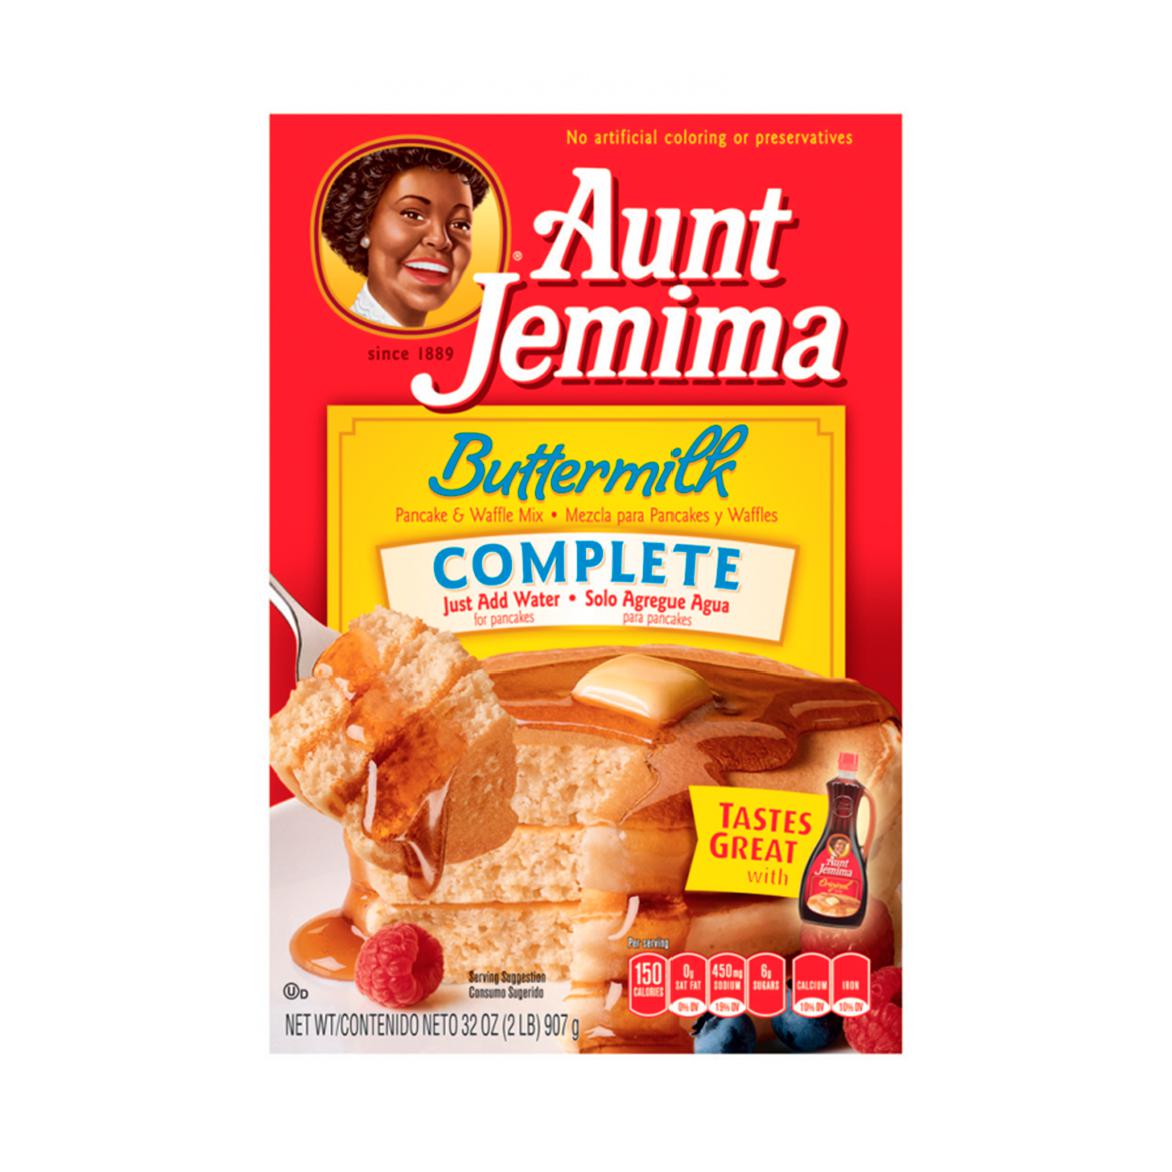 Aunt Jemima Buttermilk Complete Pancake Mix 907g - Candy Mail UK